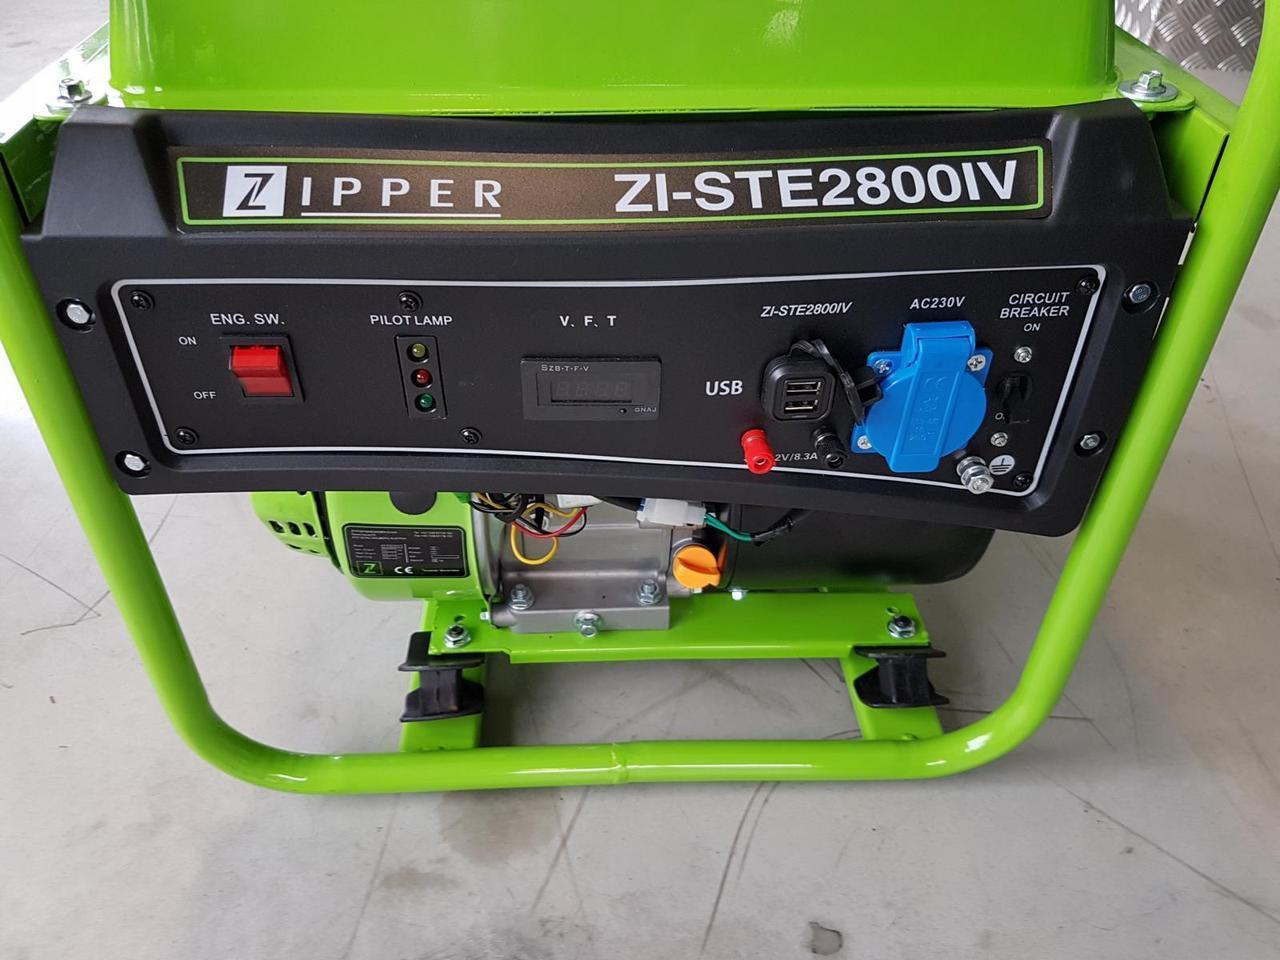 продаём Zipper ZI-STE2800IV в Украине - фото 4